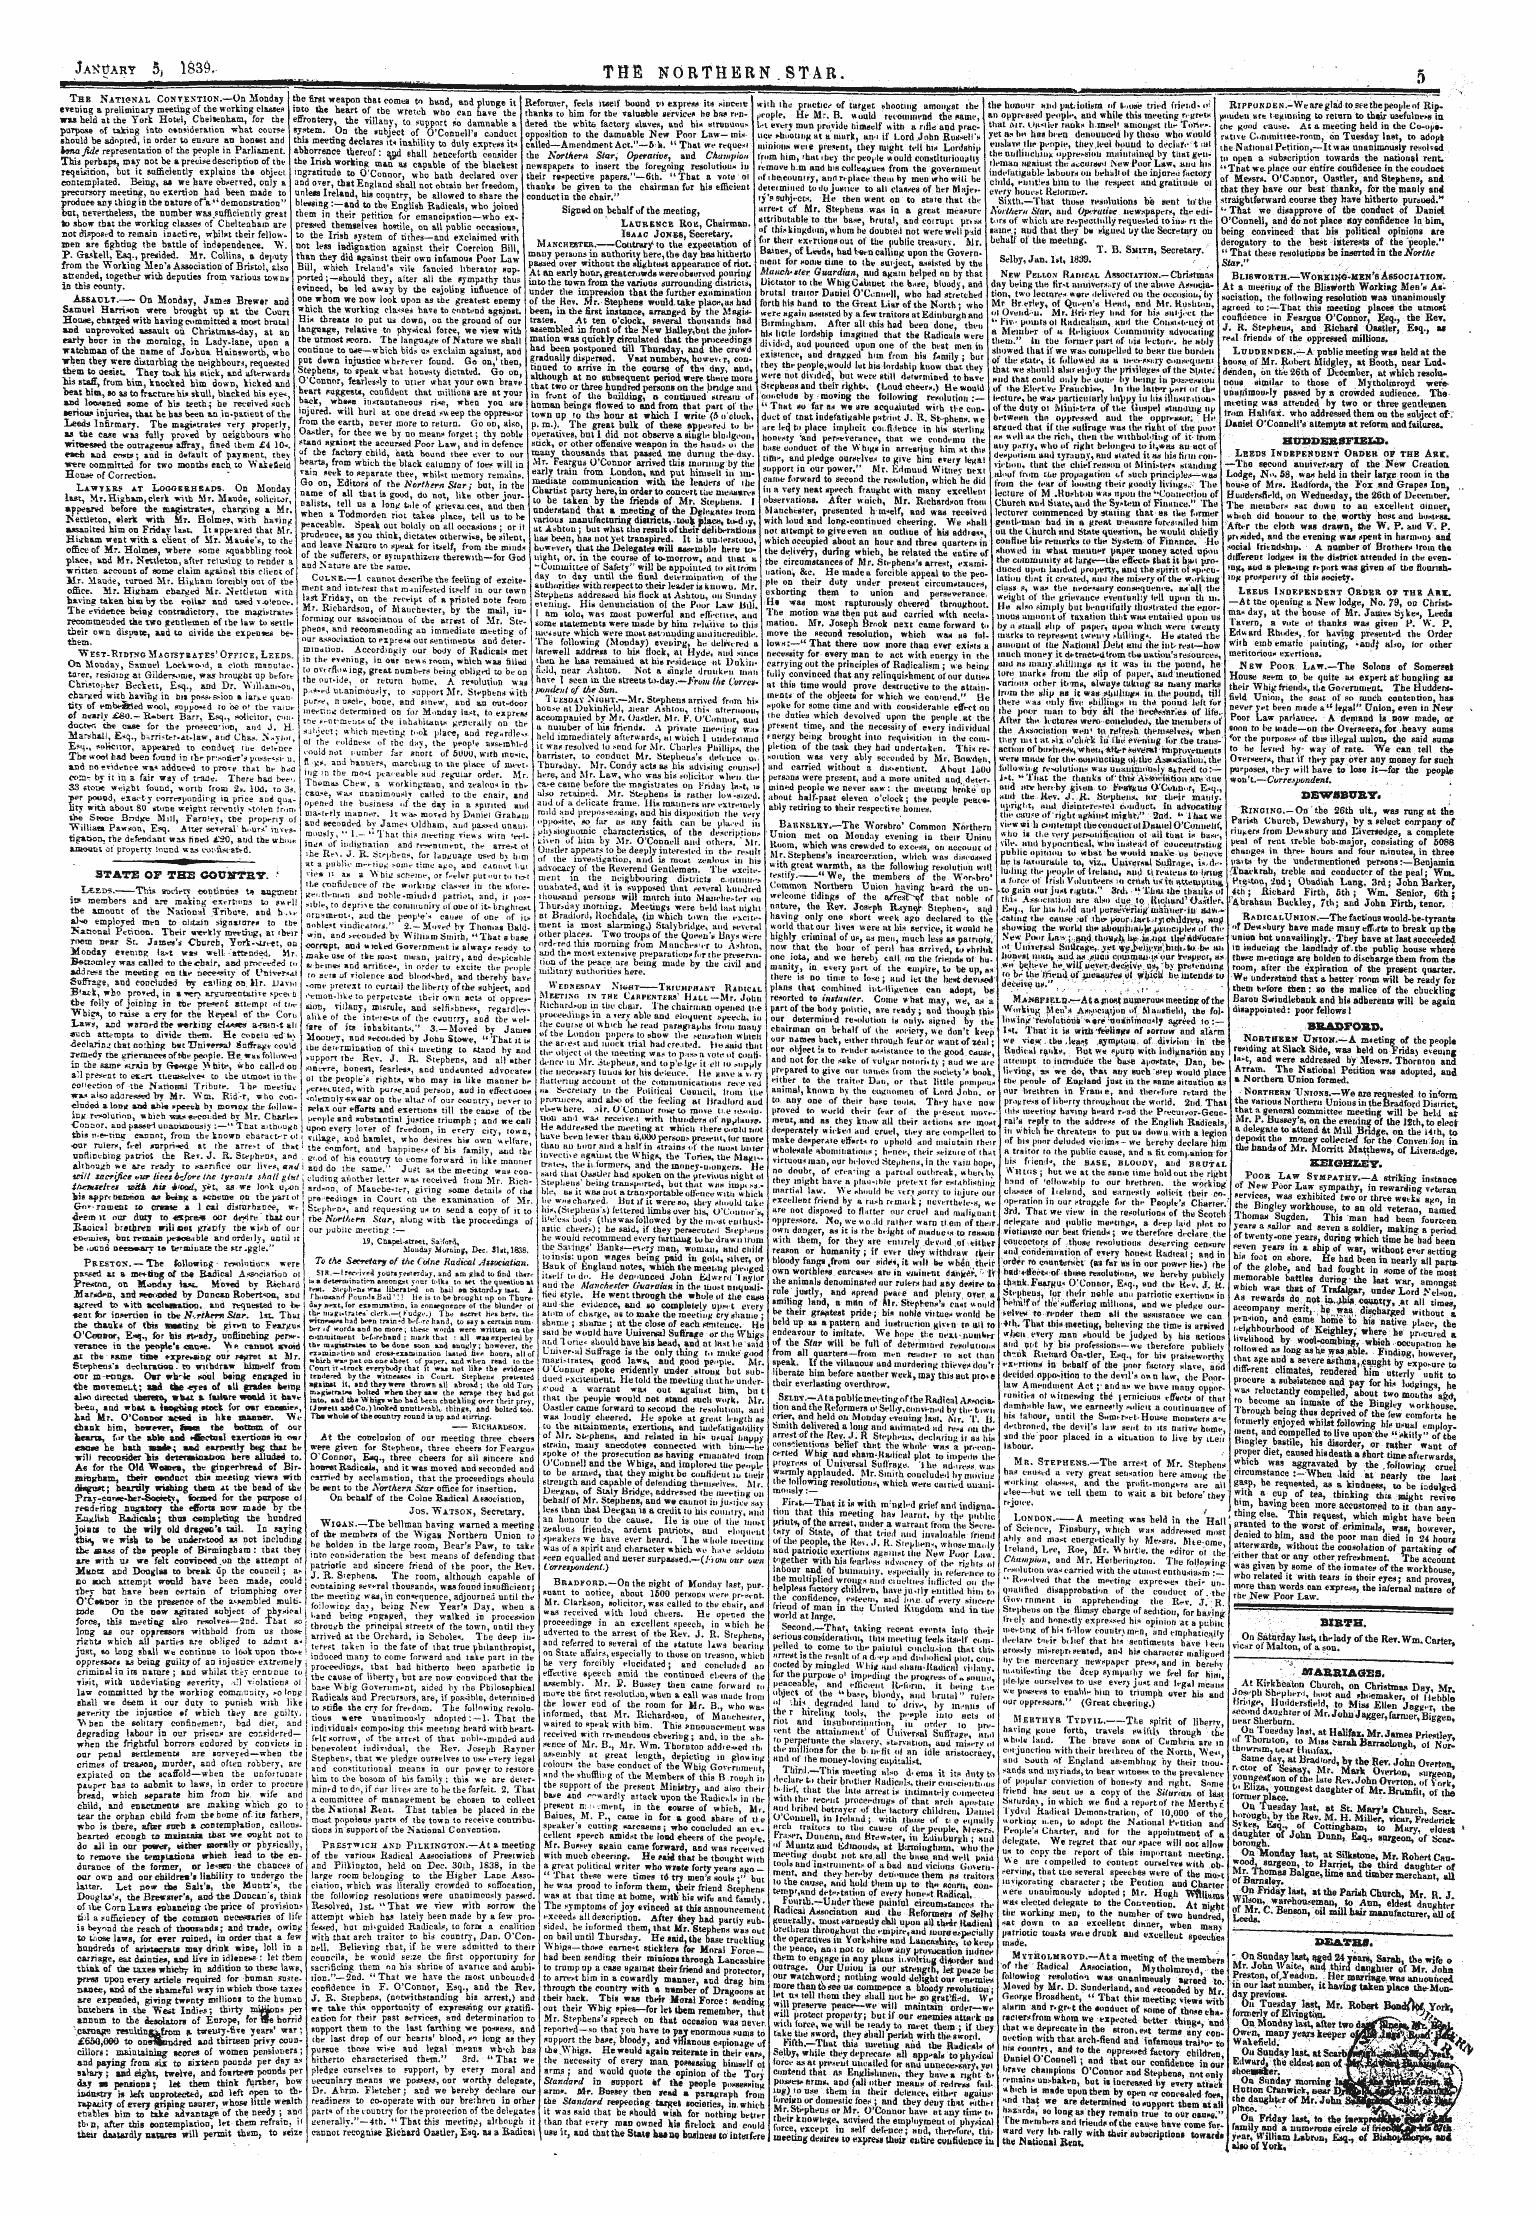 Northern Star (1837-1852): jS F Y, 1st edition - Birth.